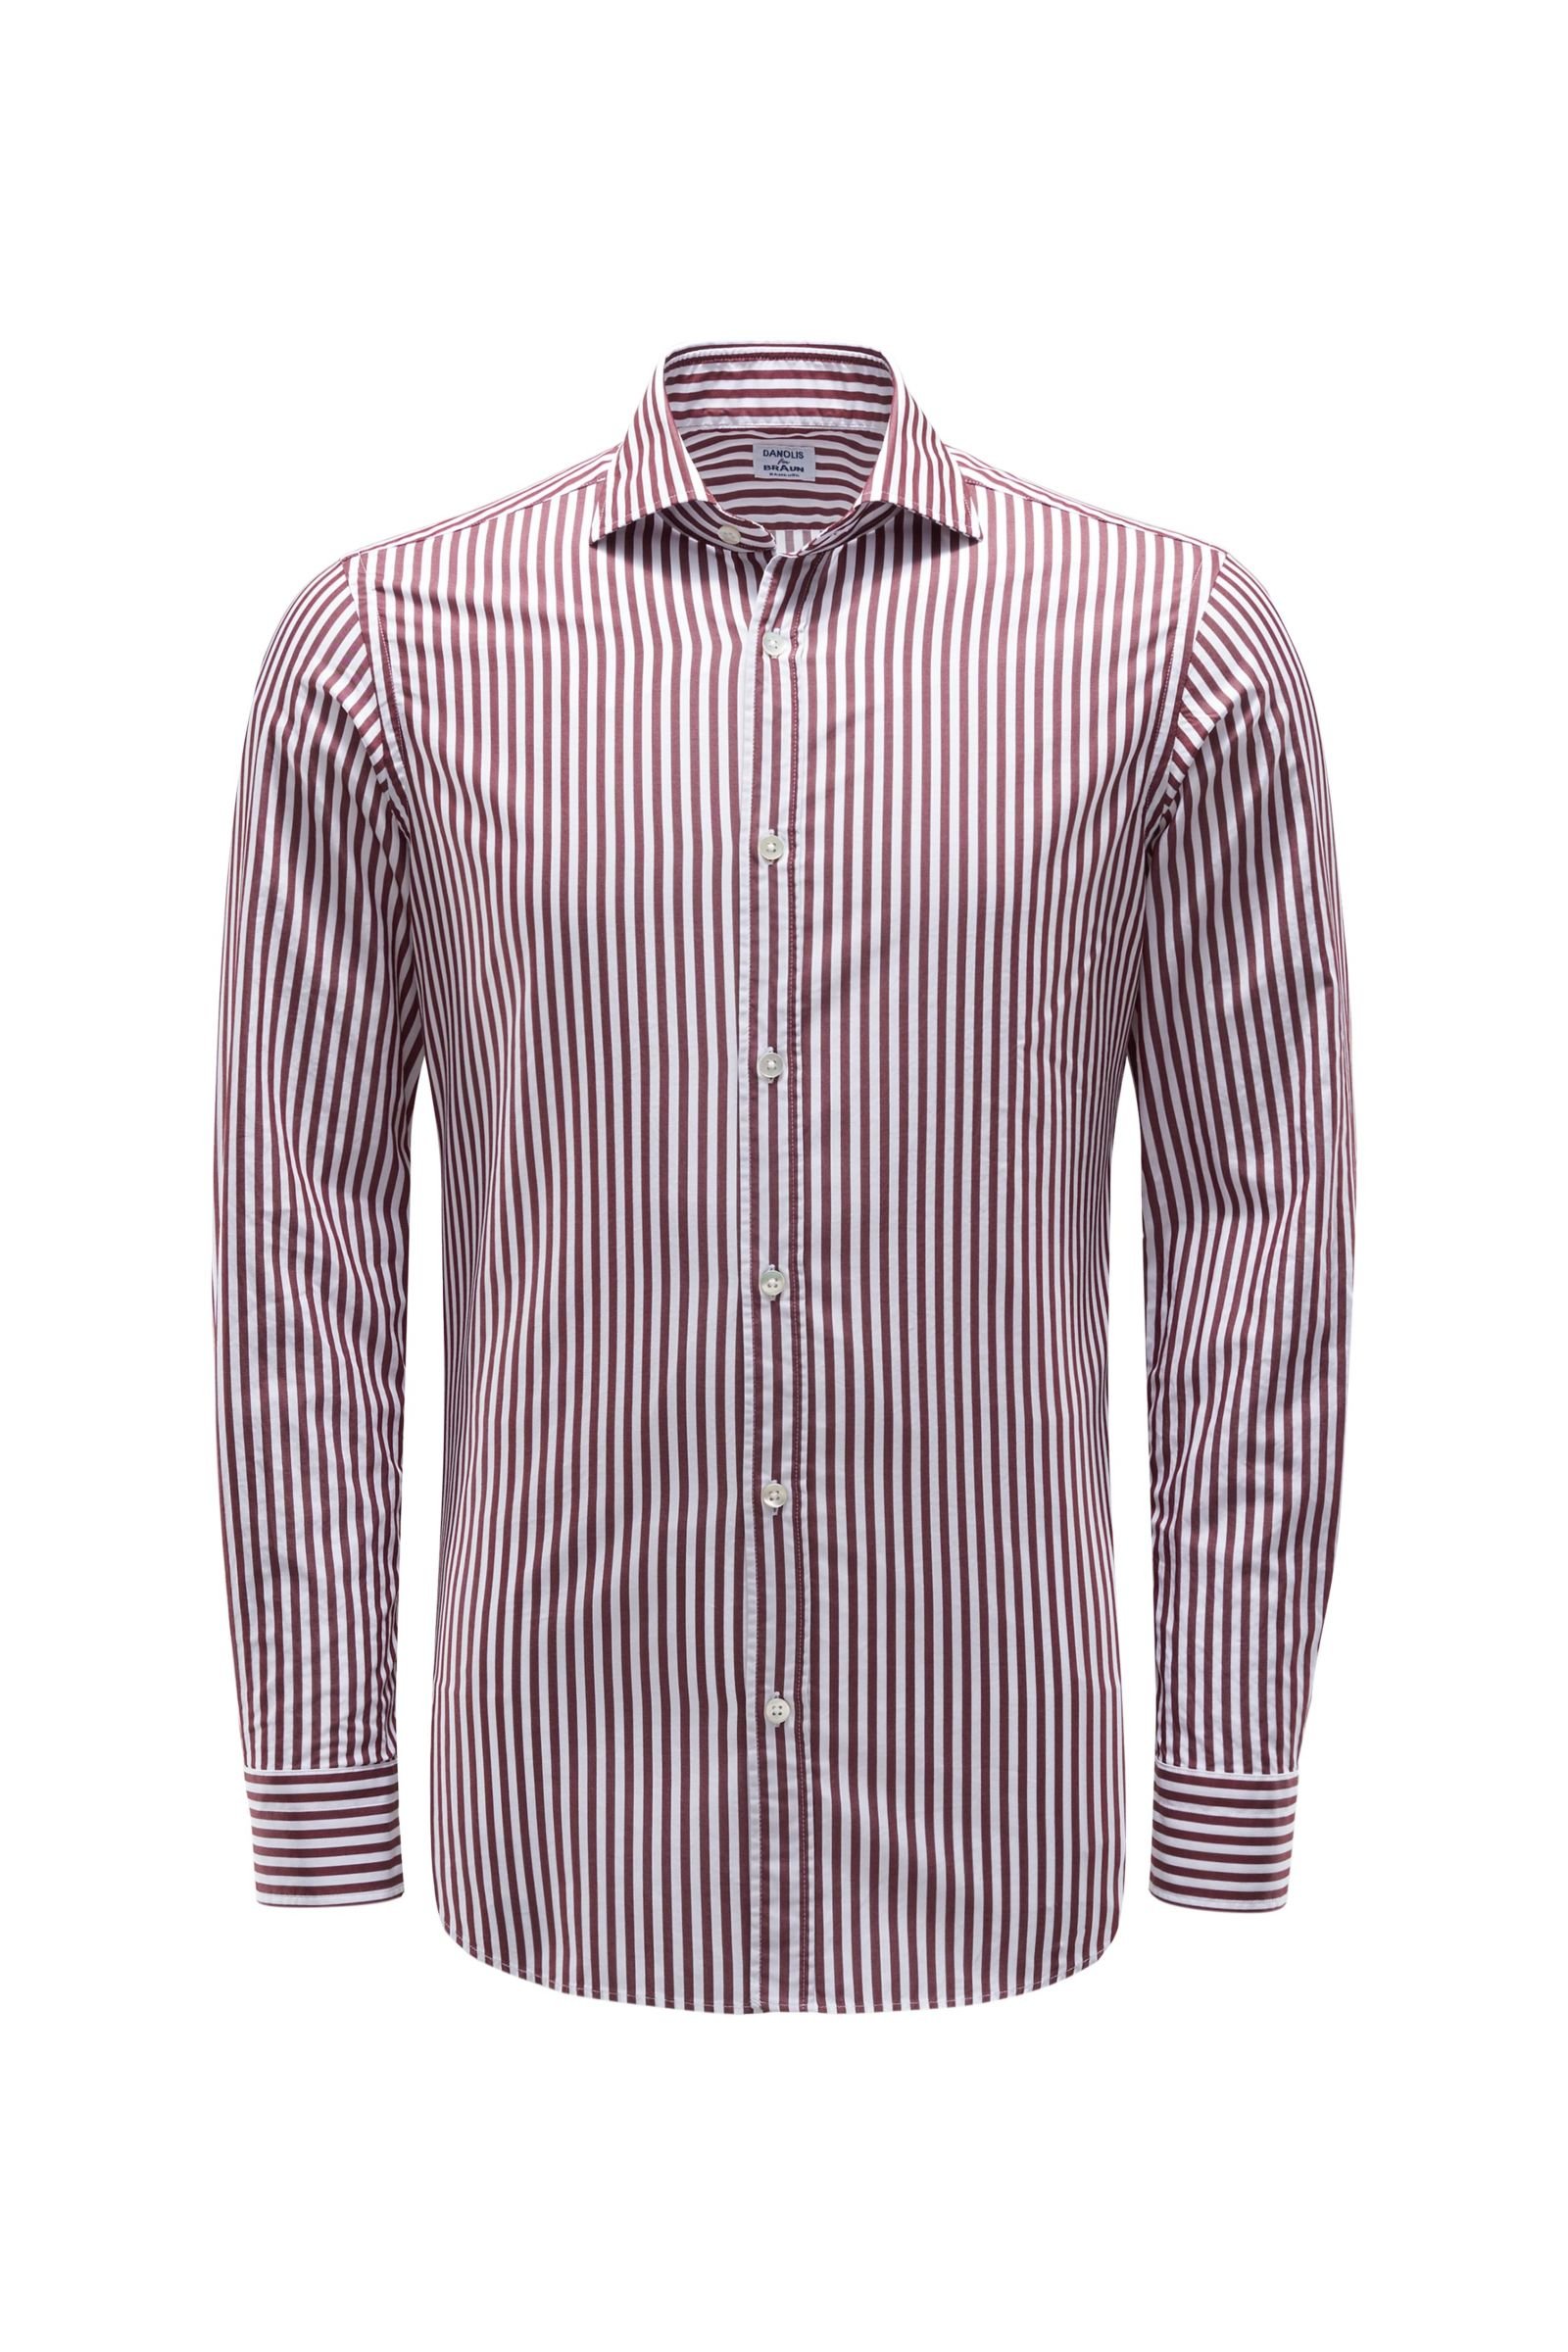 Casual shirt shark collar burgundy/white striped